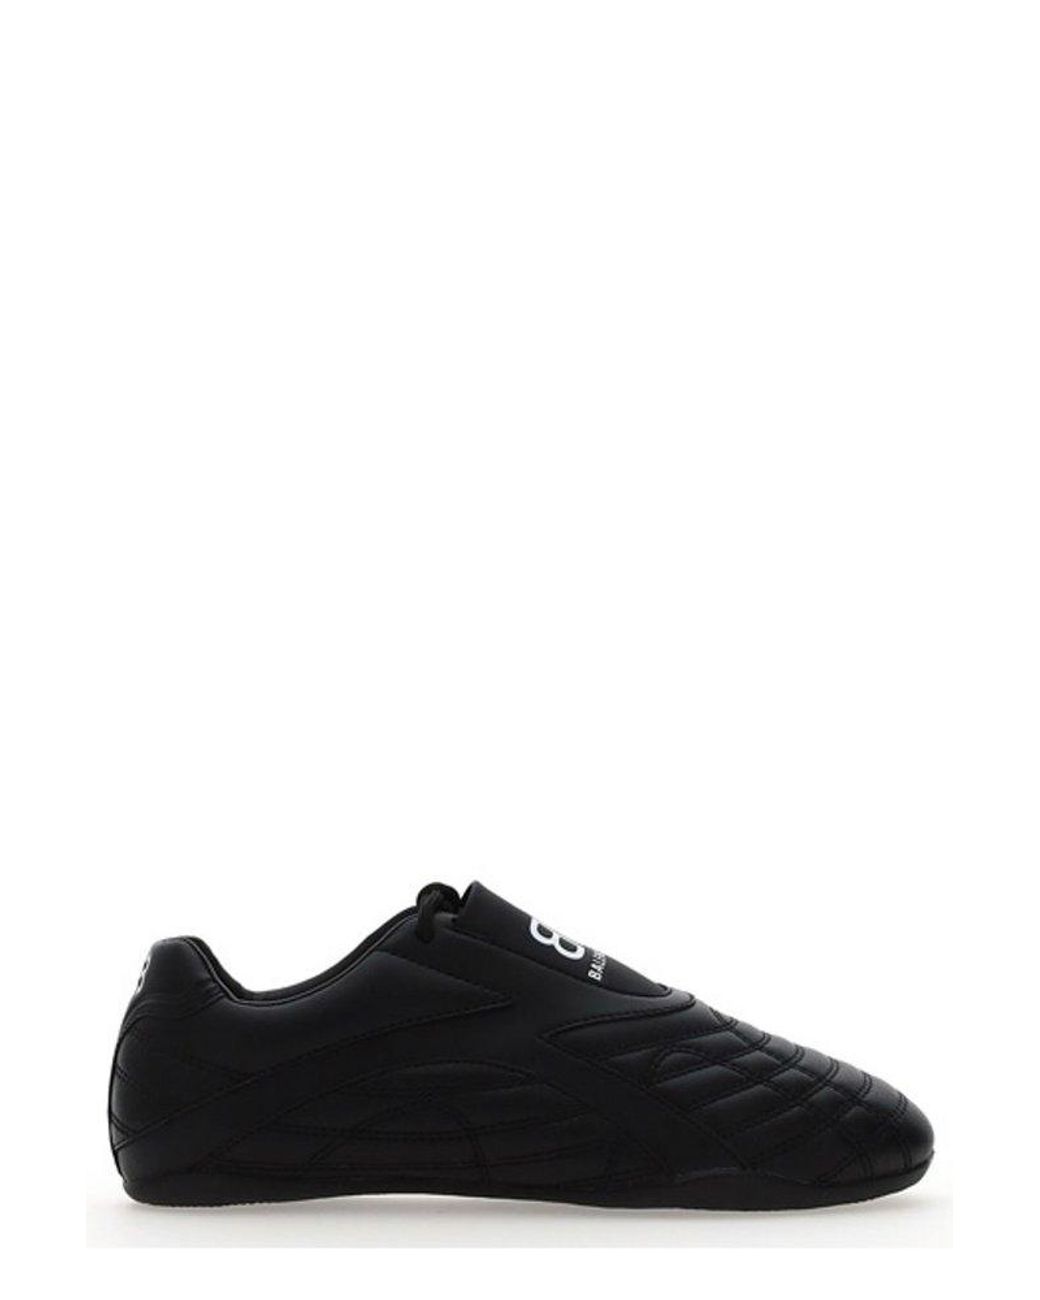 Balenciaga Zen Sneakers in Black - Save 5% | Lyst